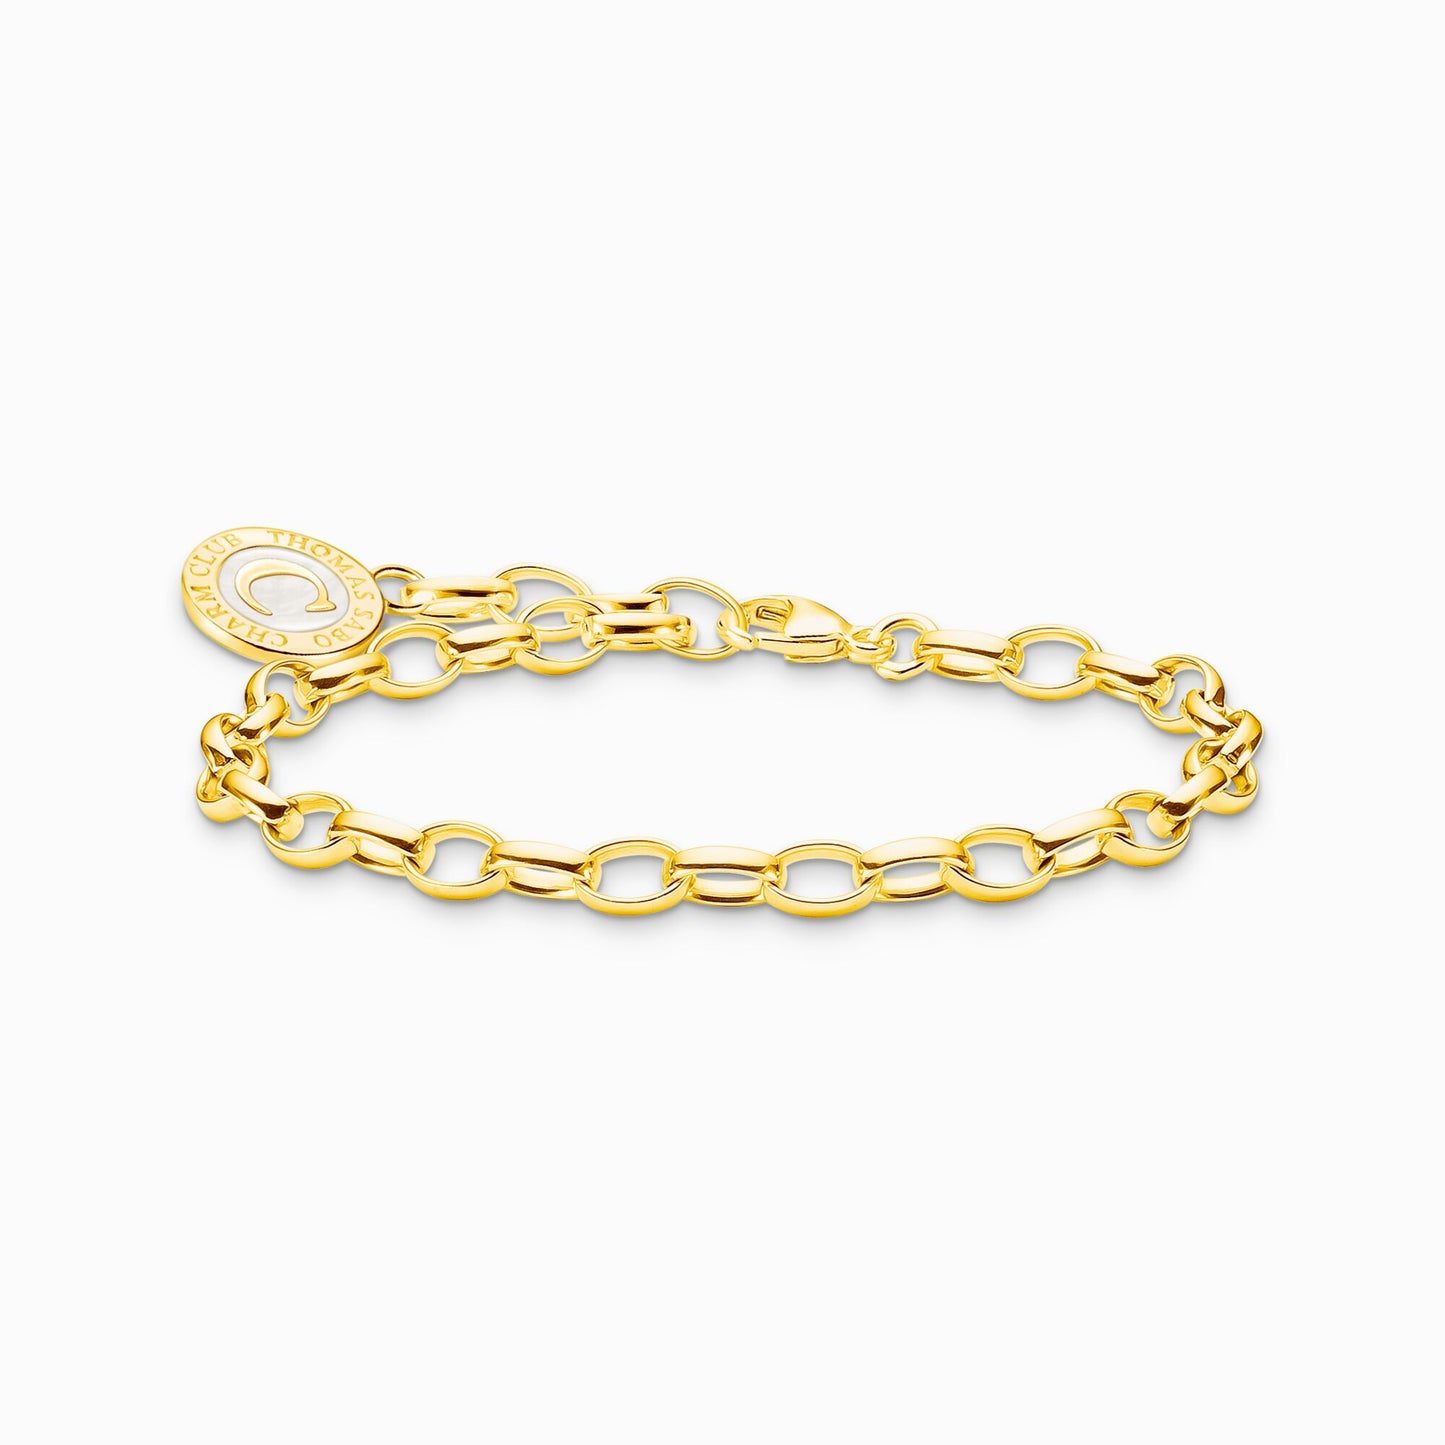 Thomas Sabo Yellow Gold Plated Charm Bracelet with white Charmista Coin X0287-427-39 19cm